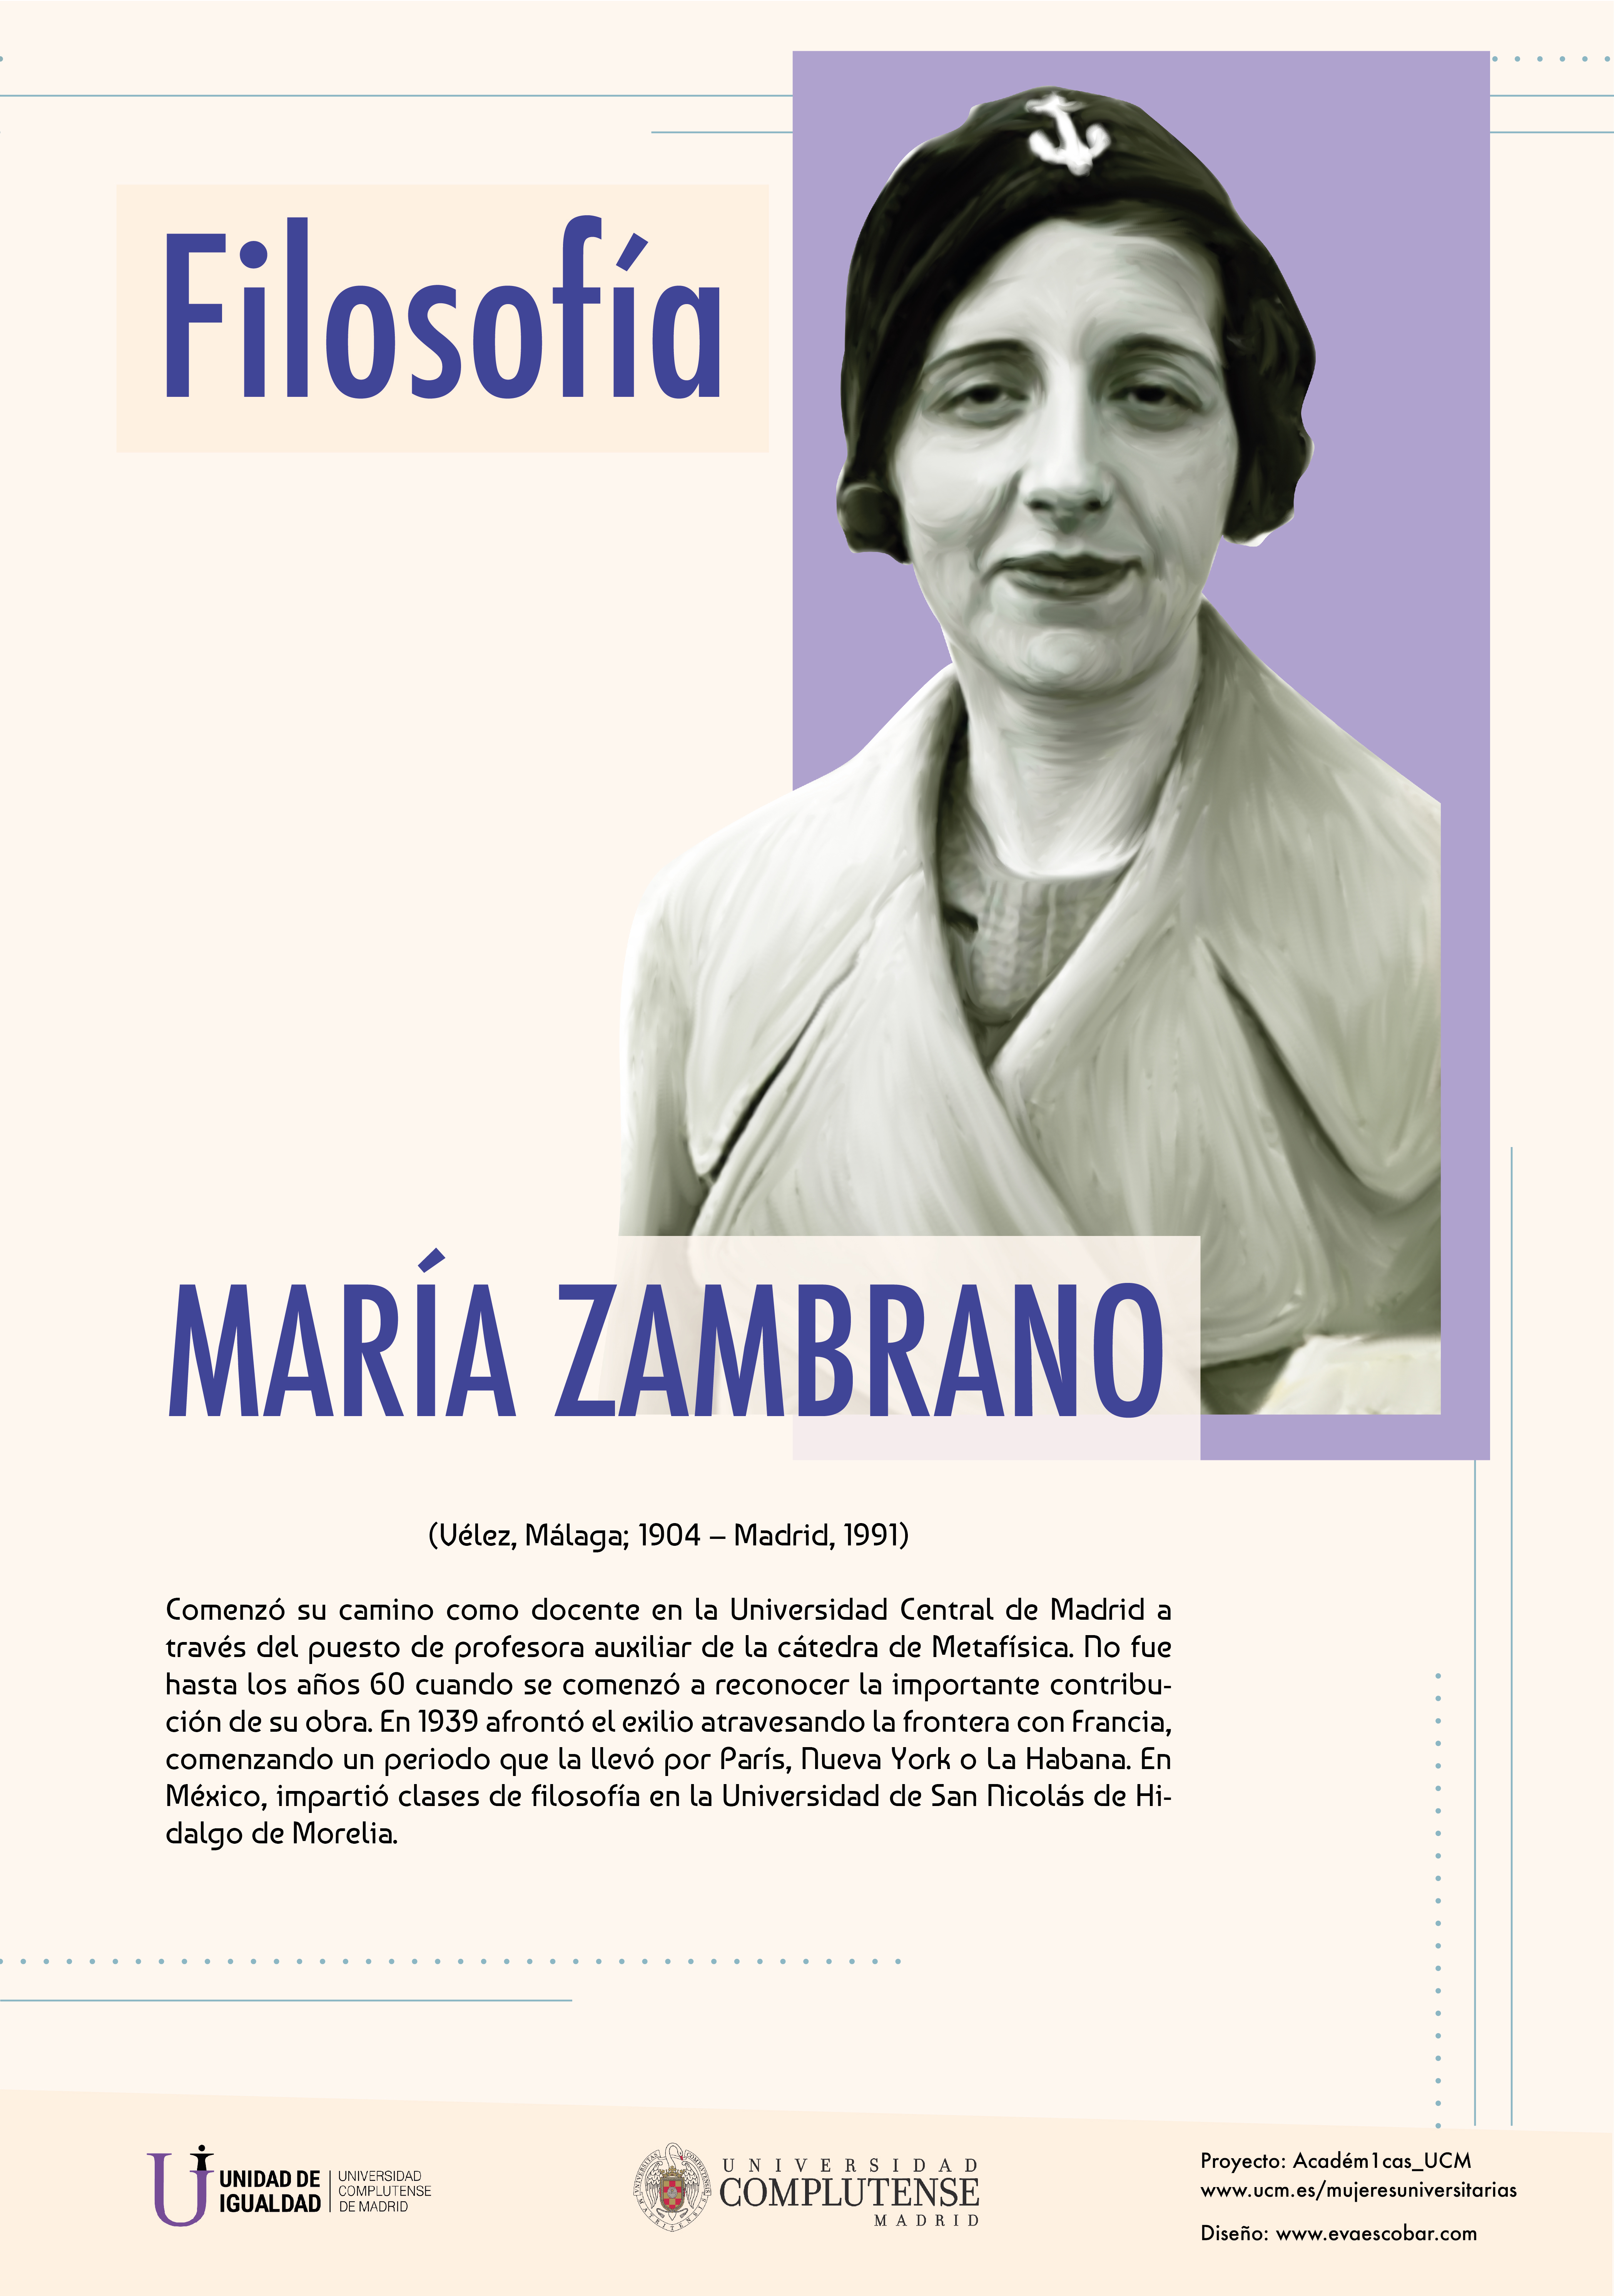 Cartel informativo sobre María Zambrano